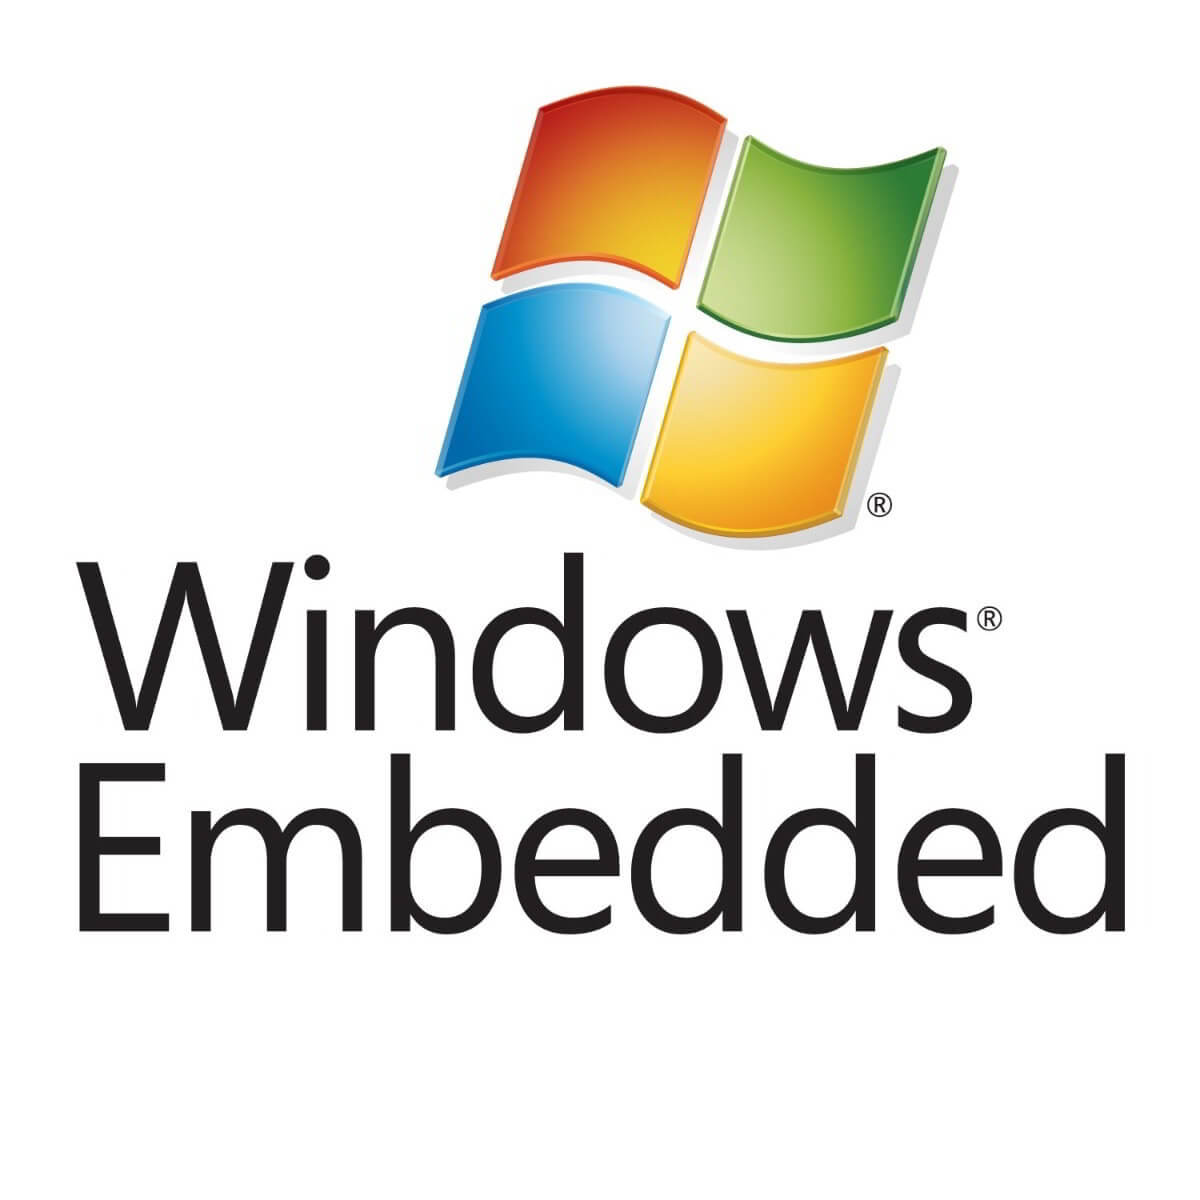 windows embedded standard download